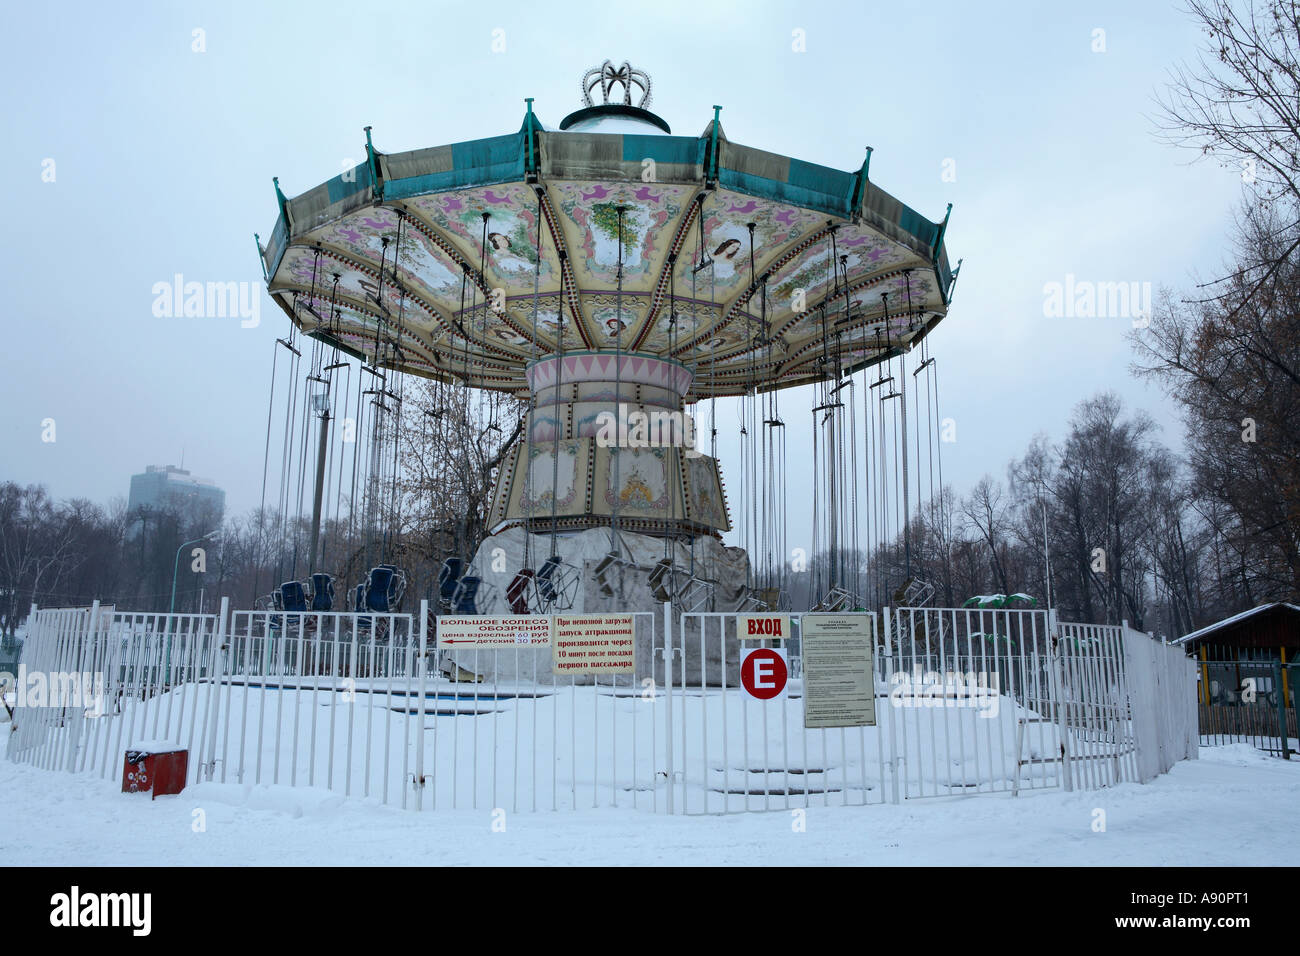 Abandoned Fairground Carousel Ride, Gorky Park, Moscow Stock Photo